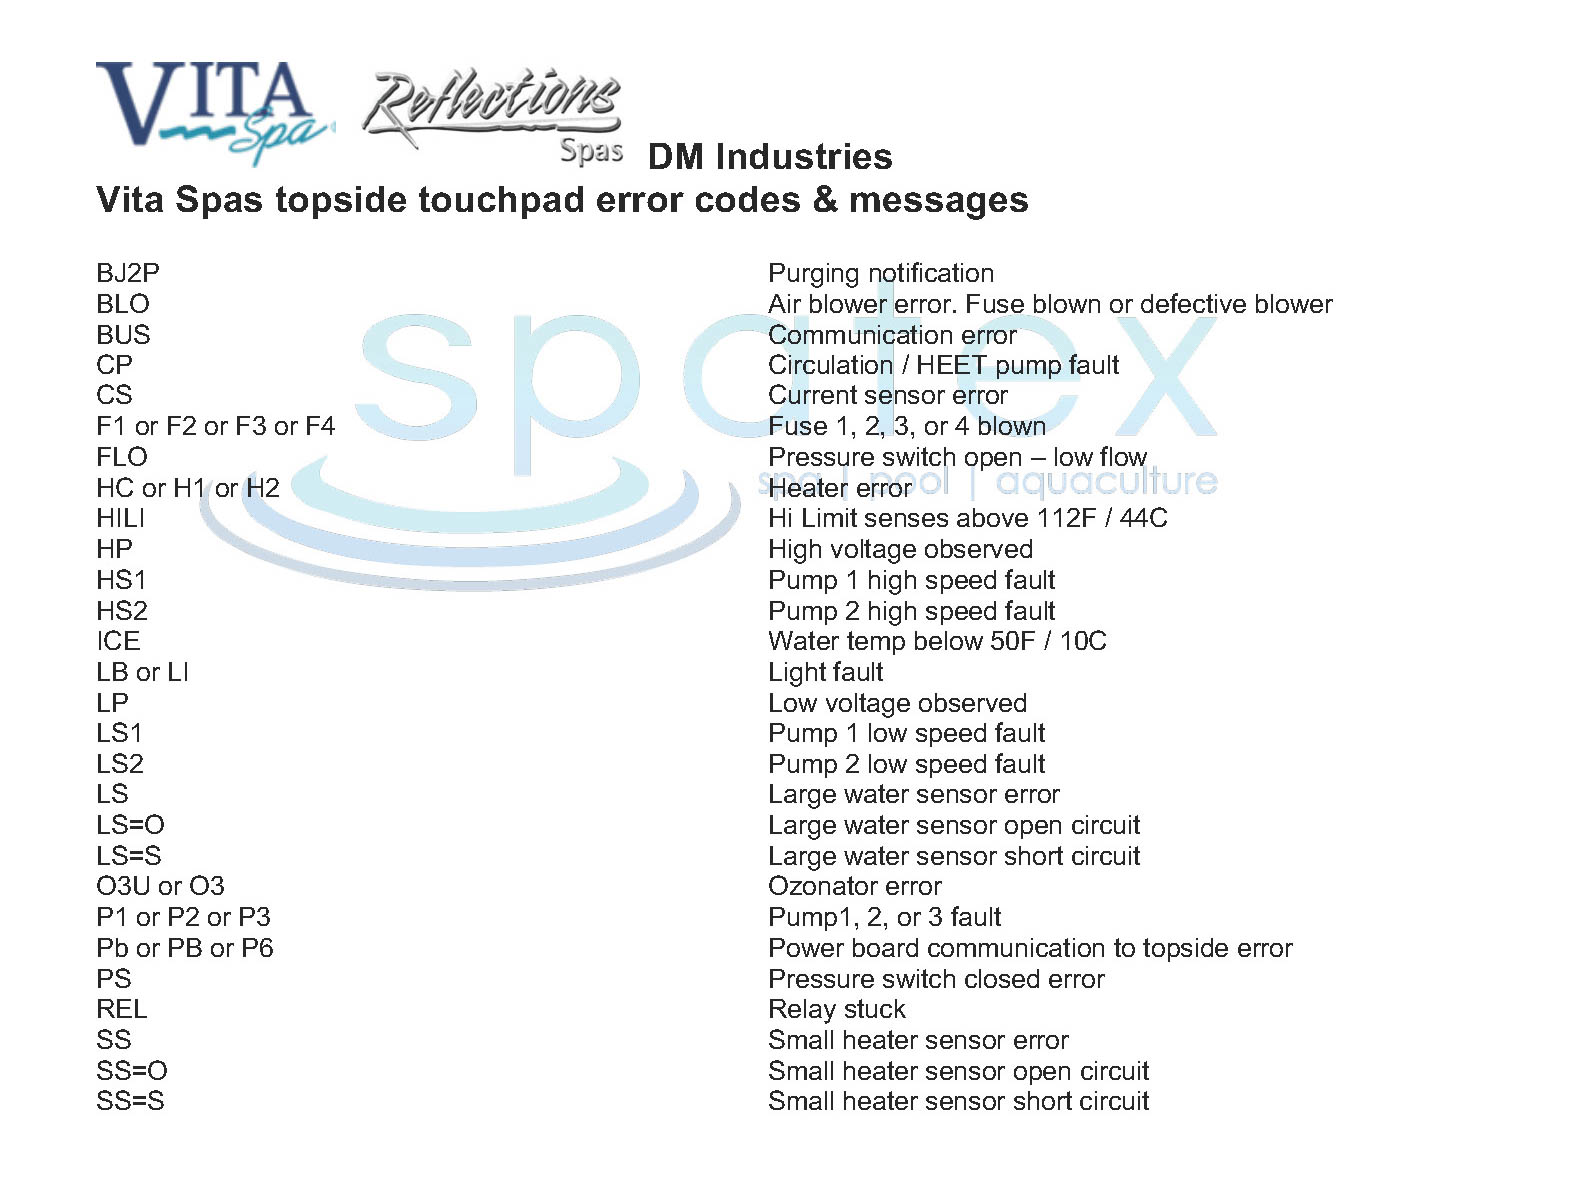 Vita Spa, DM Industries spa topside fault error code